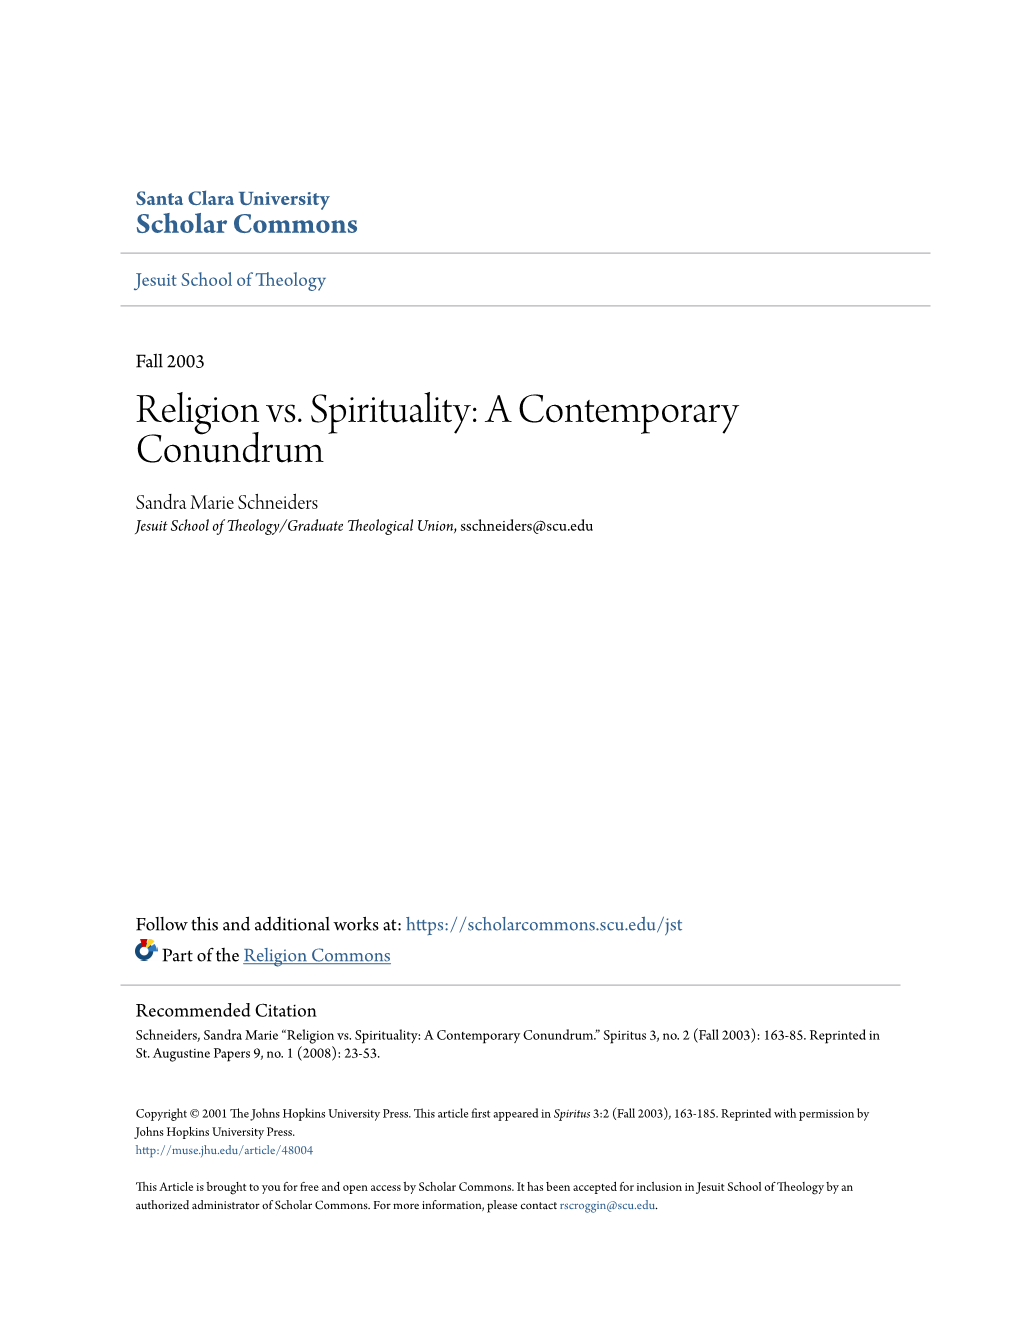 Religion Vs. Spirituality: a Contemporary Conundrum Sandra Marie Schneiders Jesuit School of Theology/Graduate Theological Union, Sschneiders@Scu.Edu